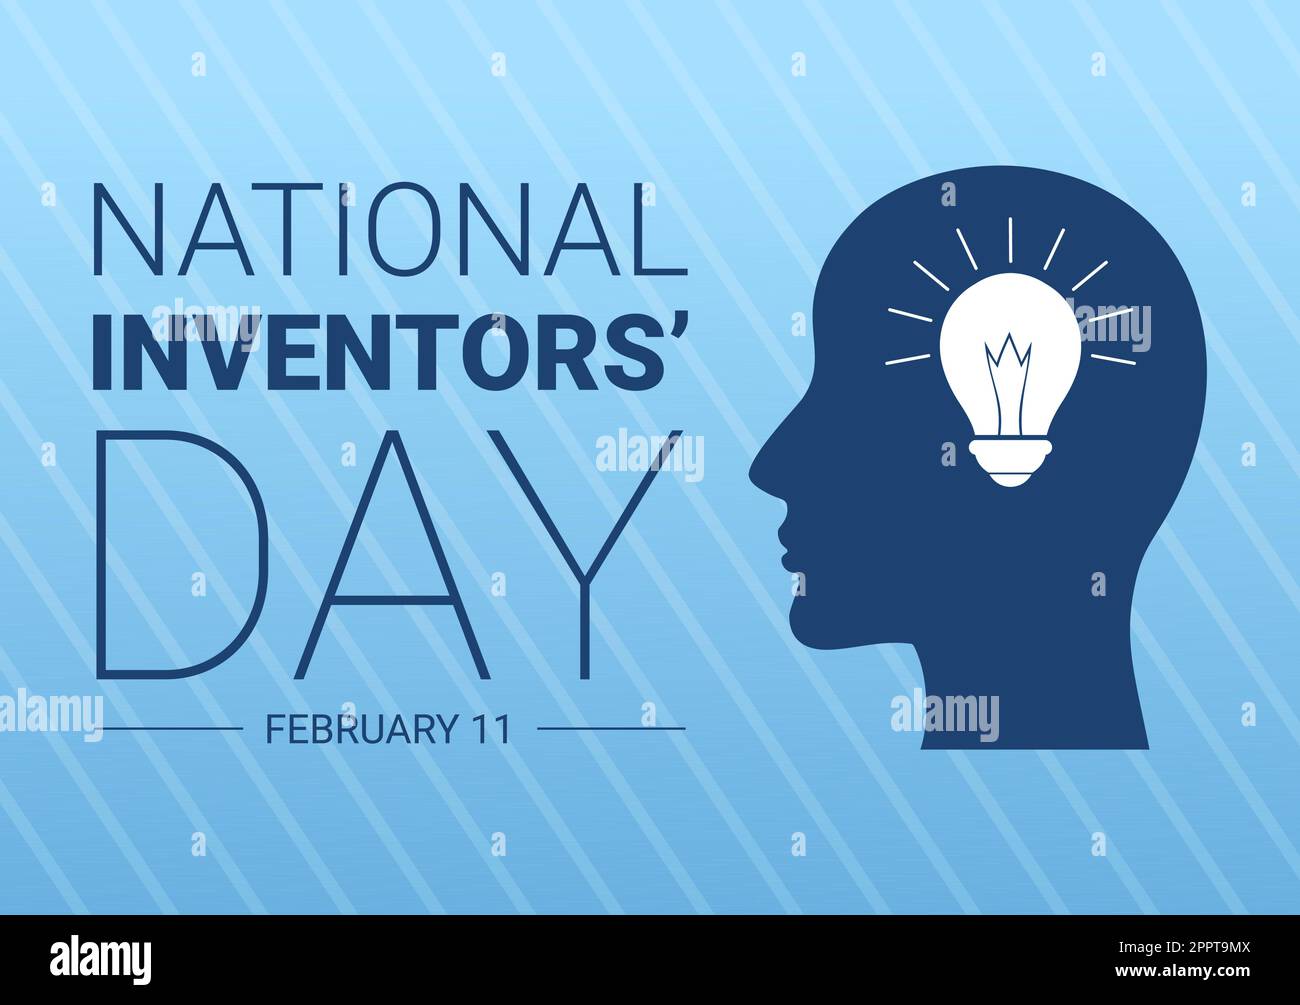 National Inventors Day am 11. Februar feiert Genius Innovation an Honor Creator of Science in Flat Cartoon Hand Drawn Template Illustration Stock Vektor